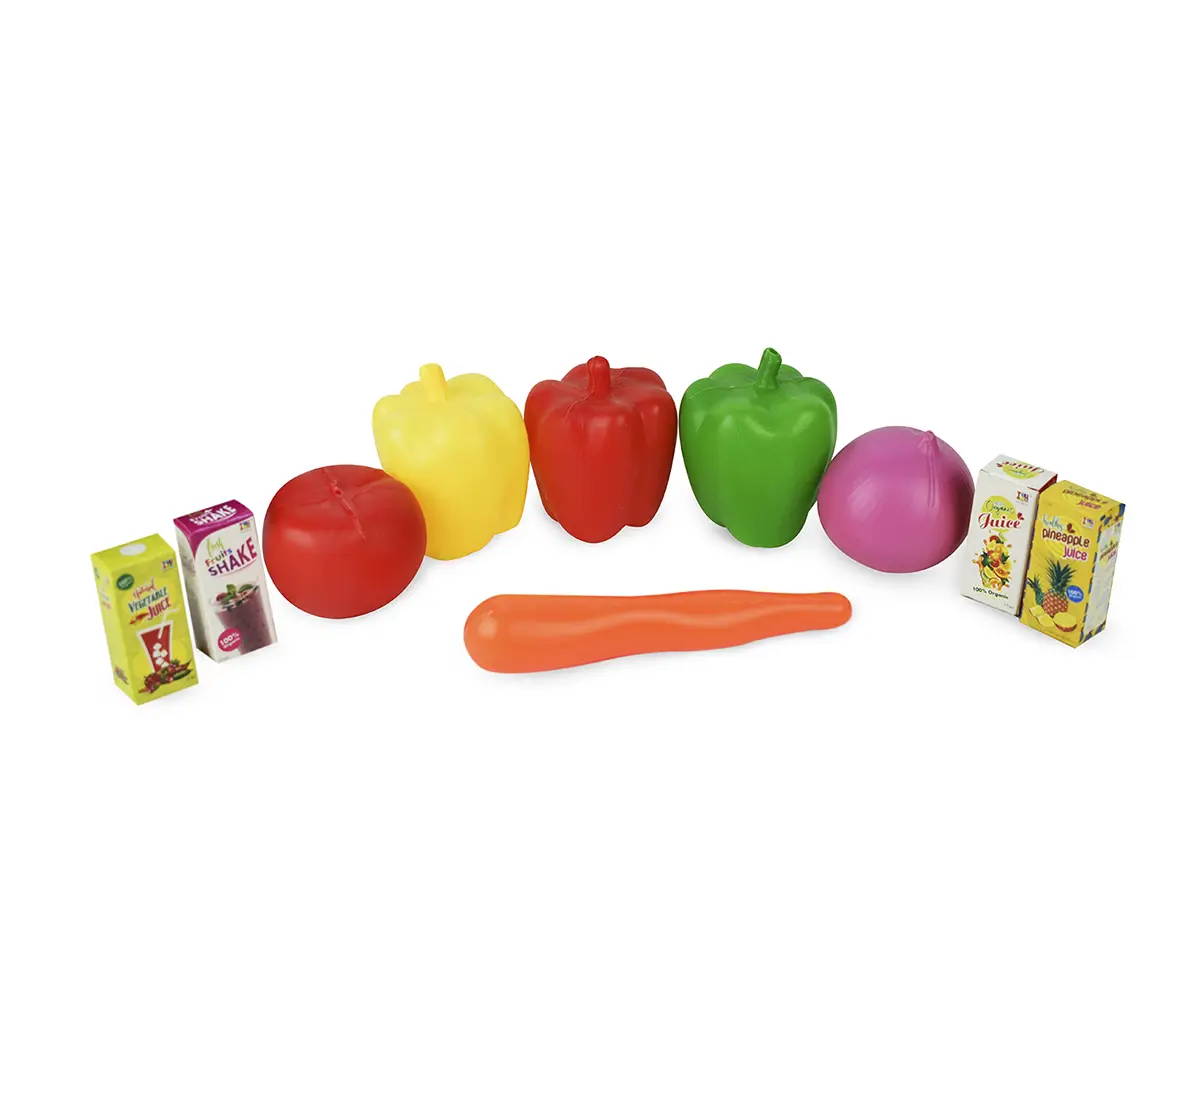 I Toys Fruits & vegetables Role play set for kids, 3Y+